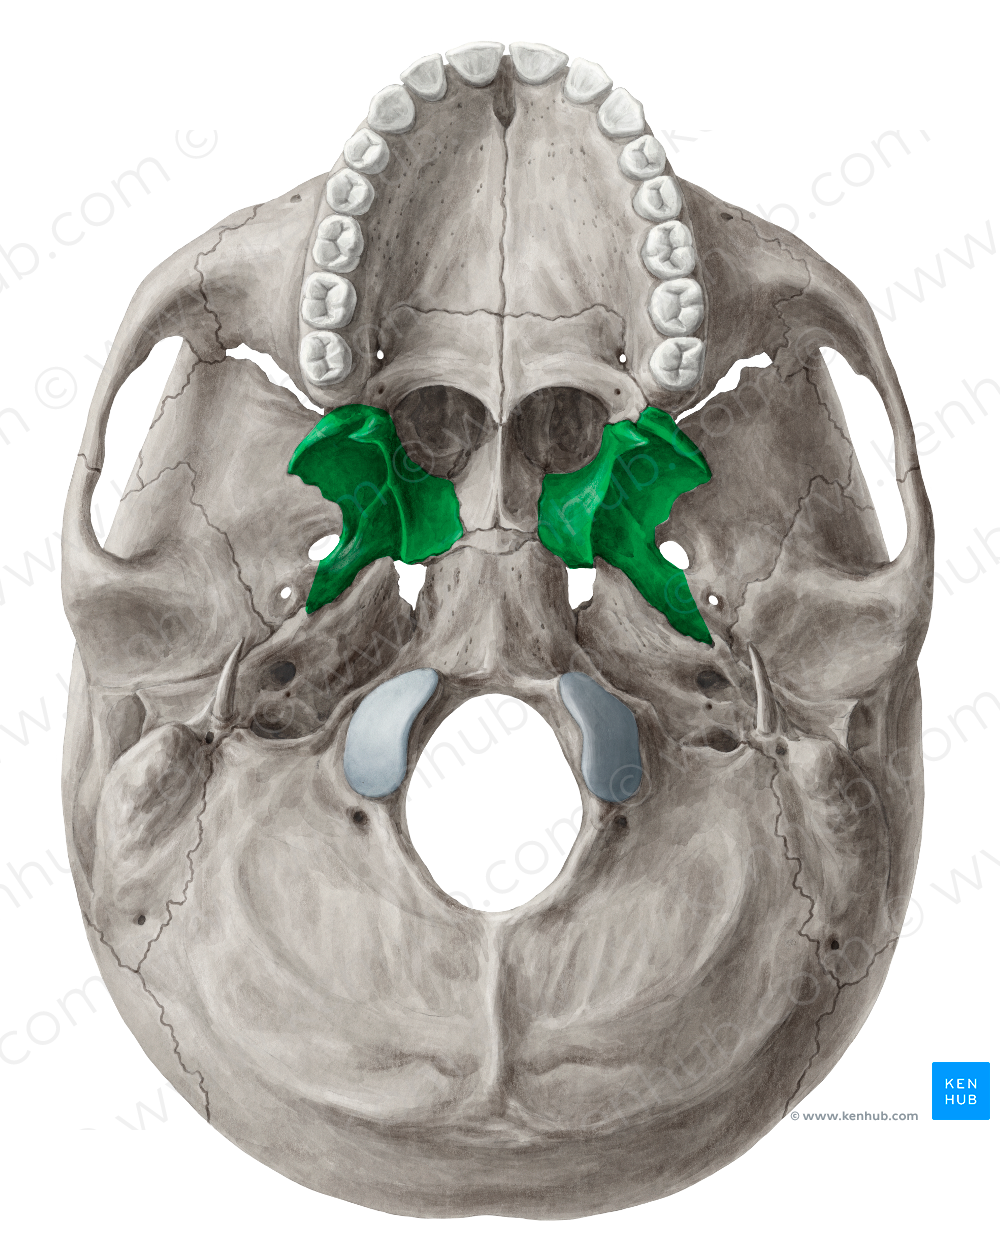 Pterygoid process of sphenoid bone (#8243)